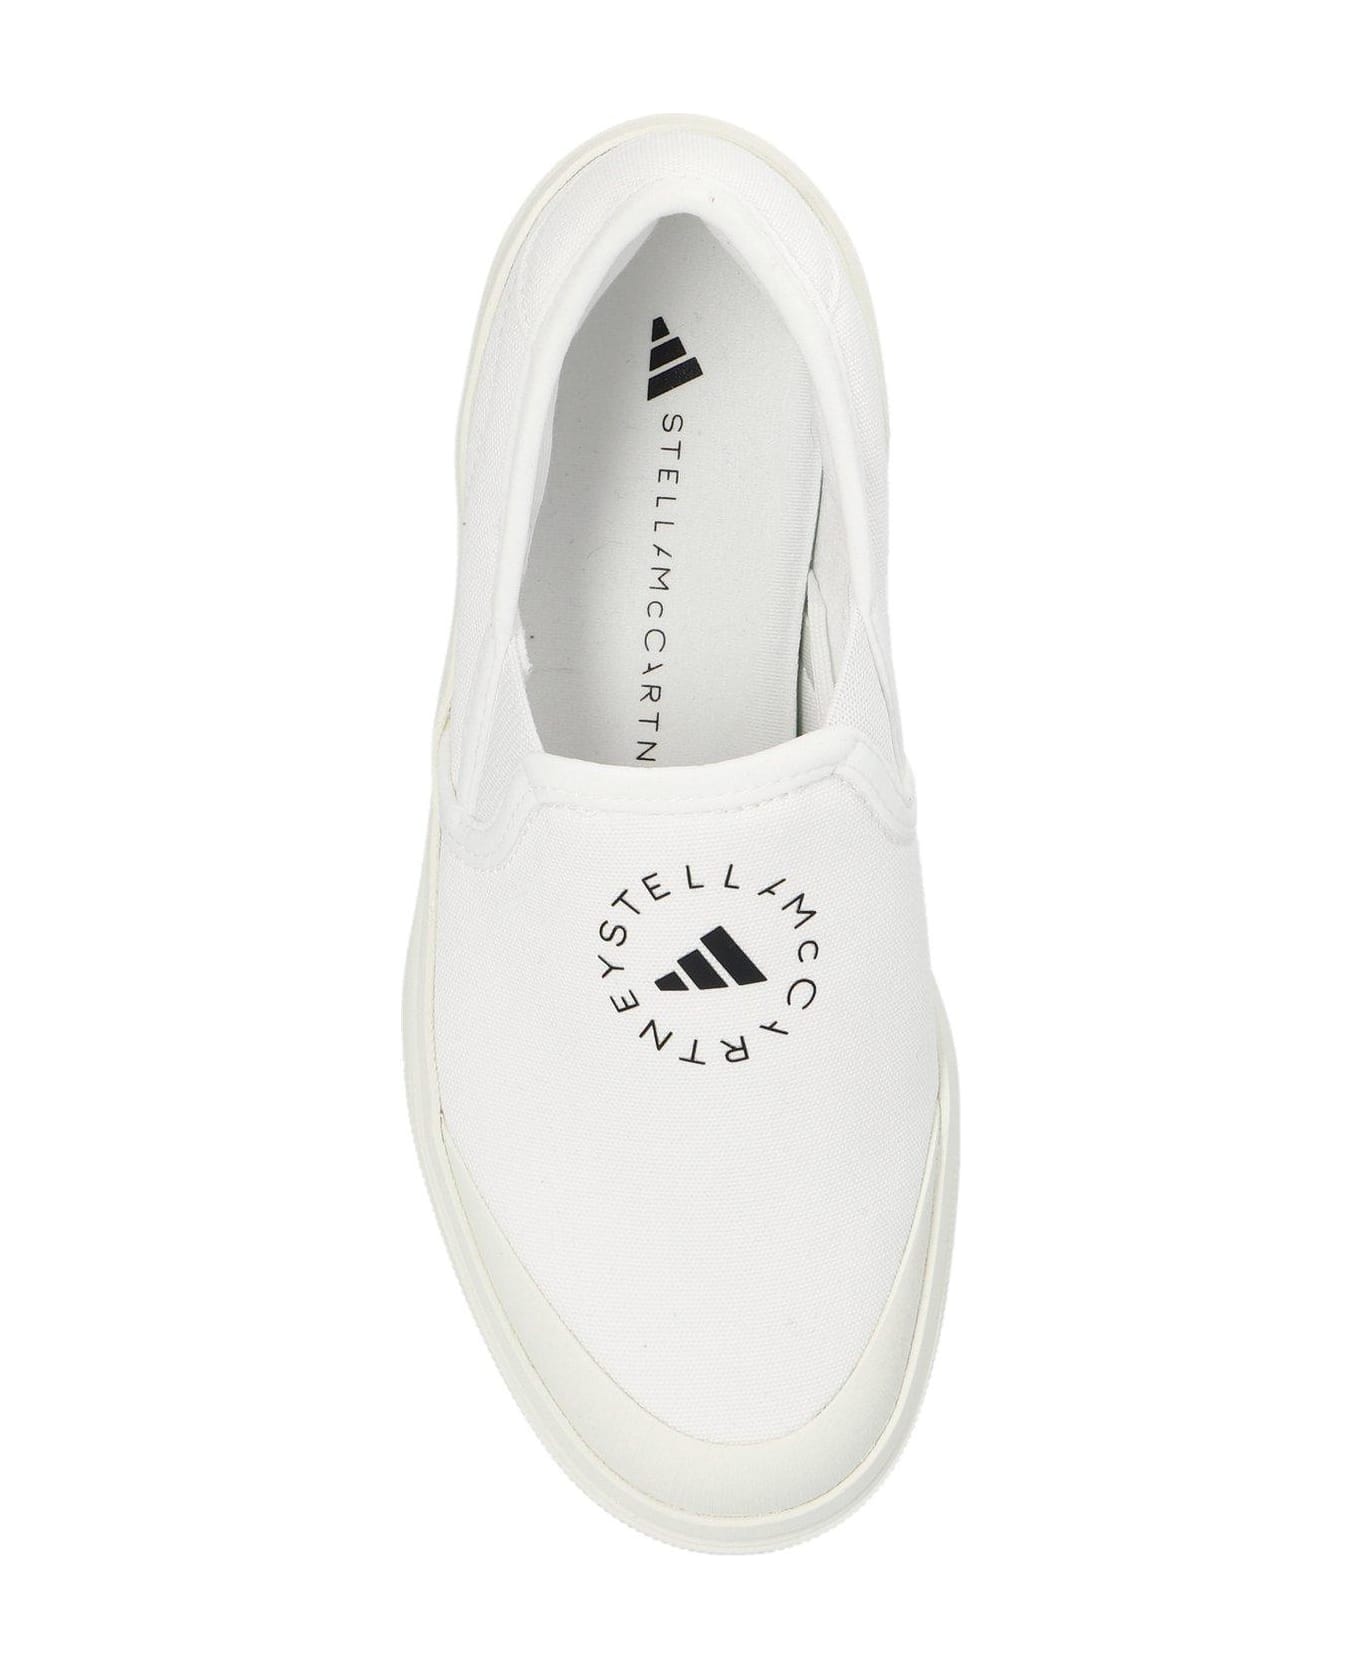 Adidas by Stella McCartney Court Slip-on Sneakers - Ftwwht Ftwwht Cblack スニーカー